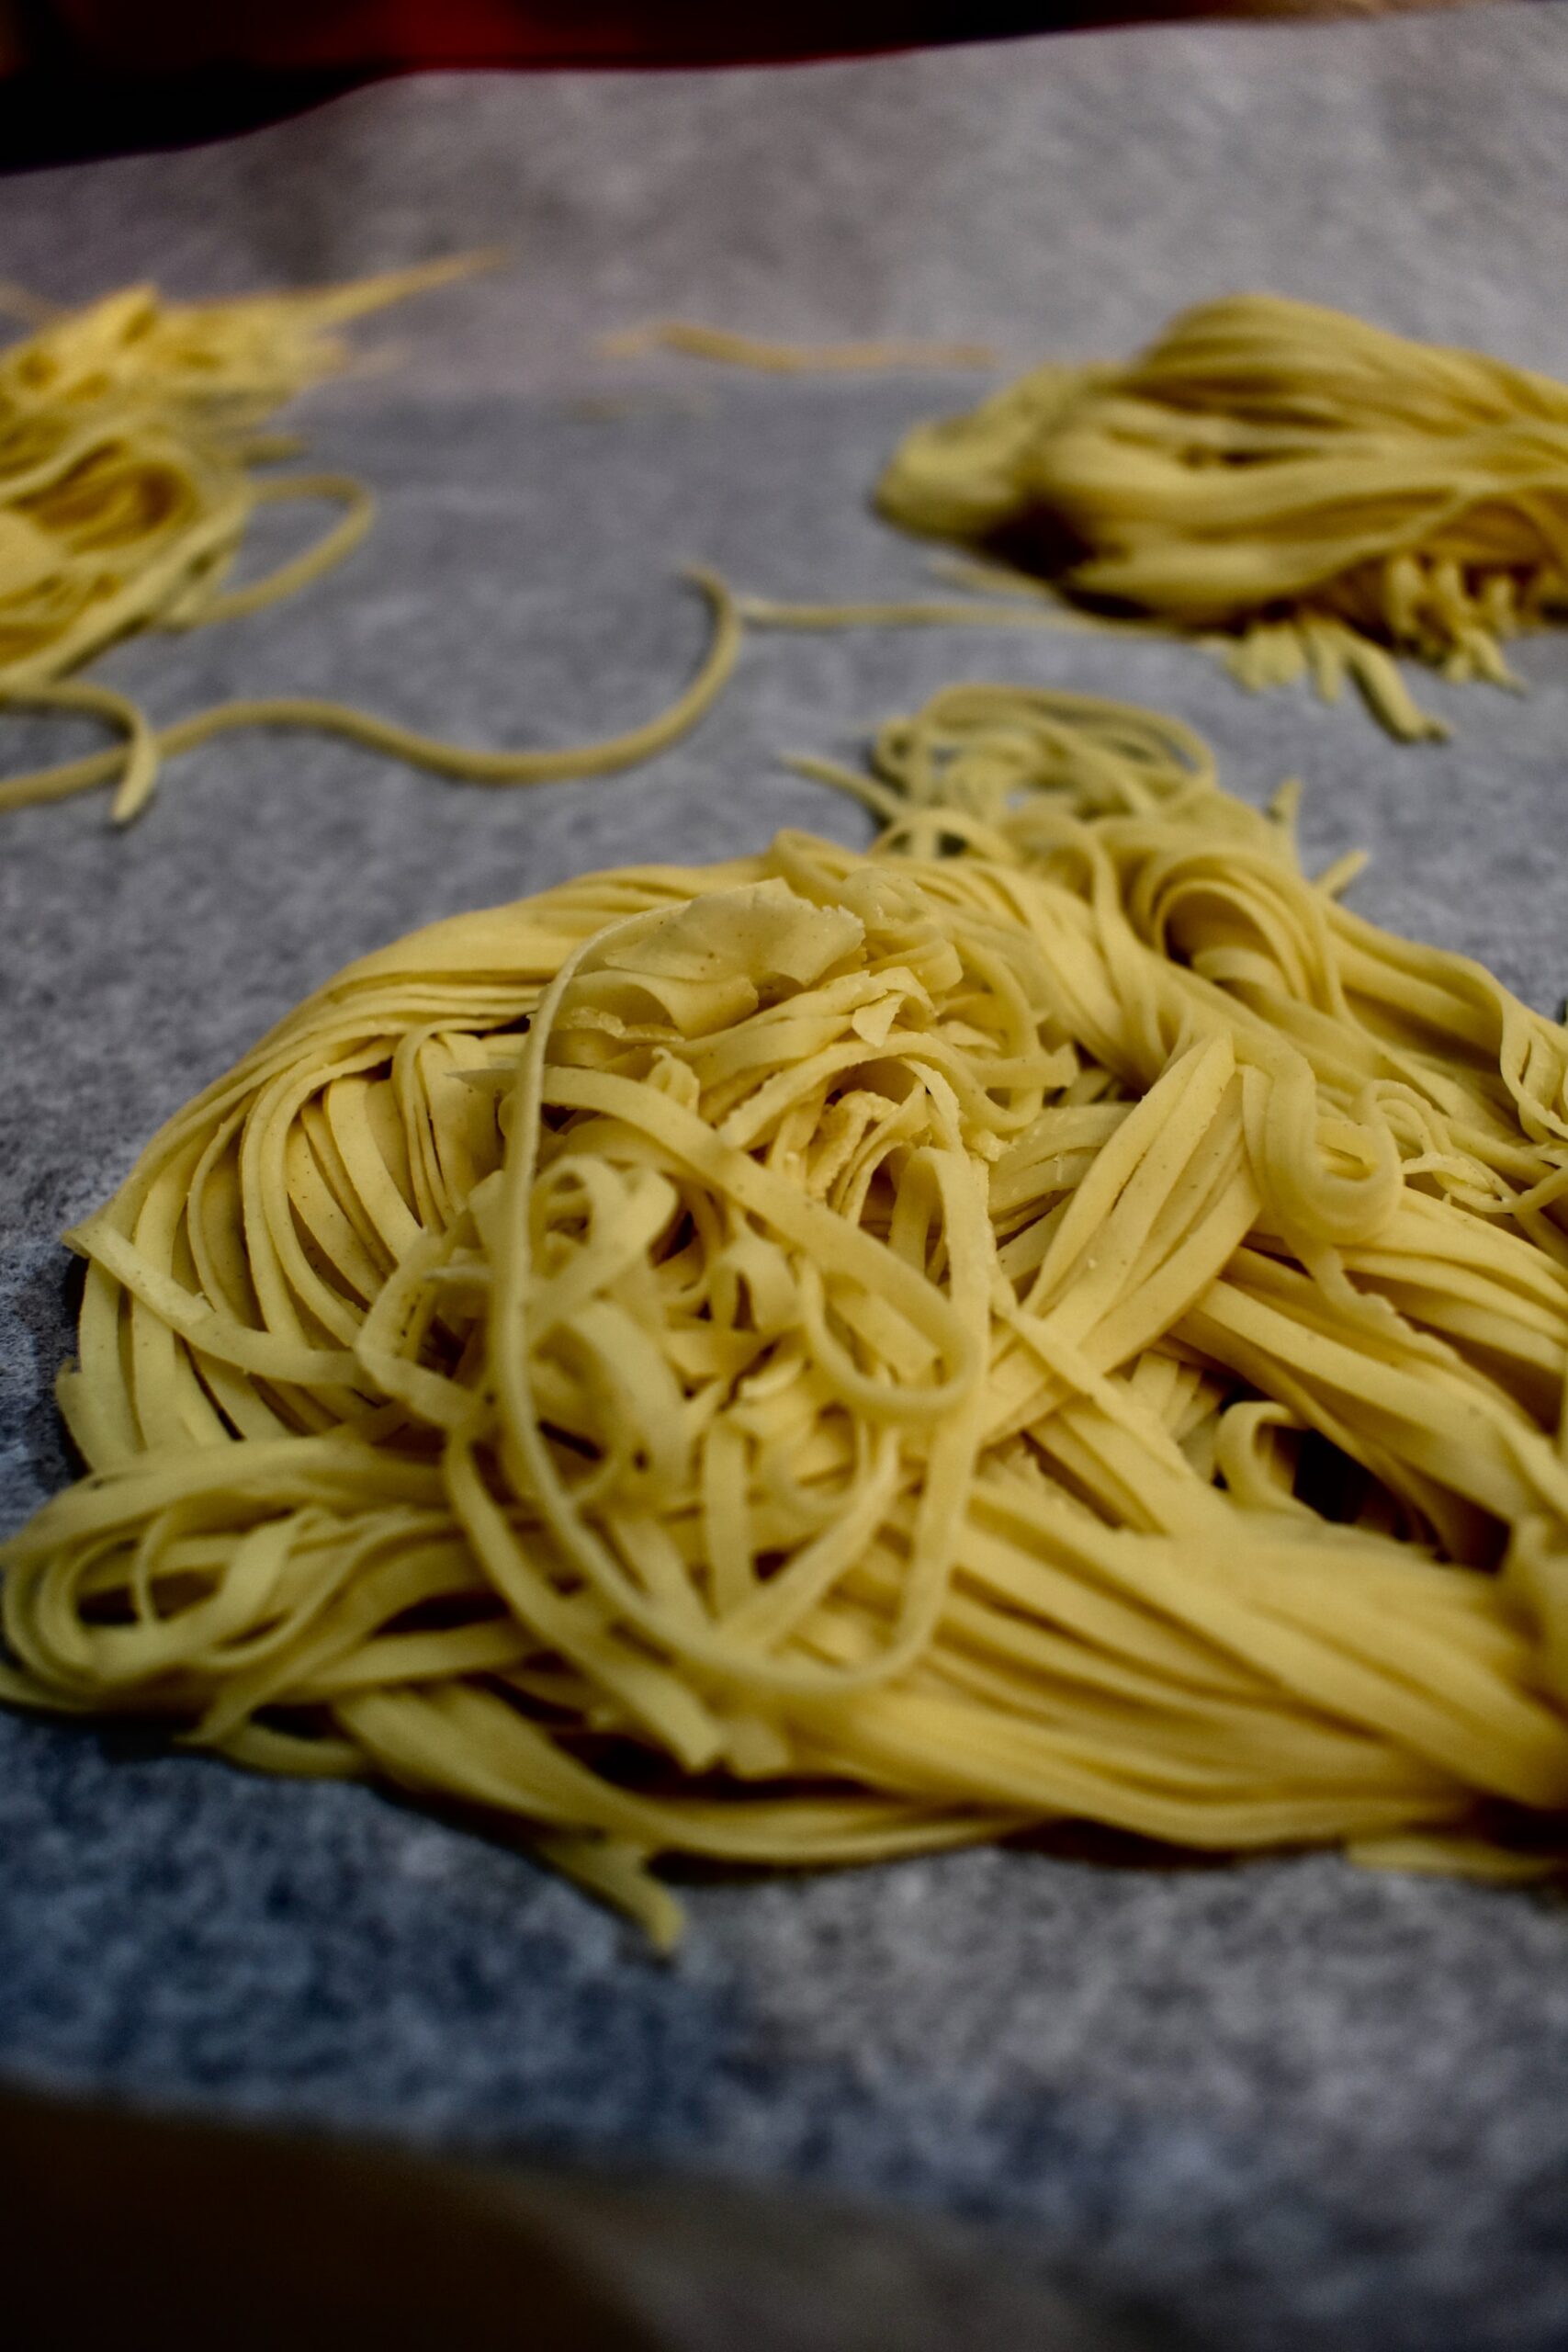 Makaron na spaghettti - mielone wołowina